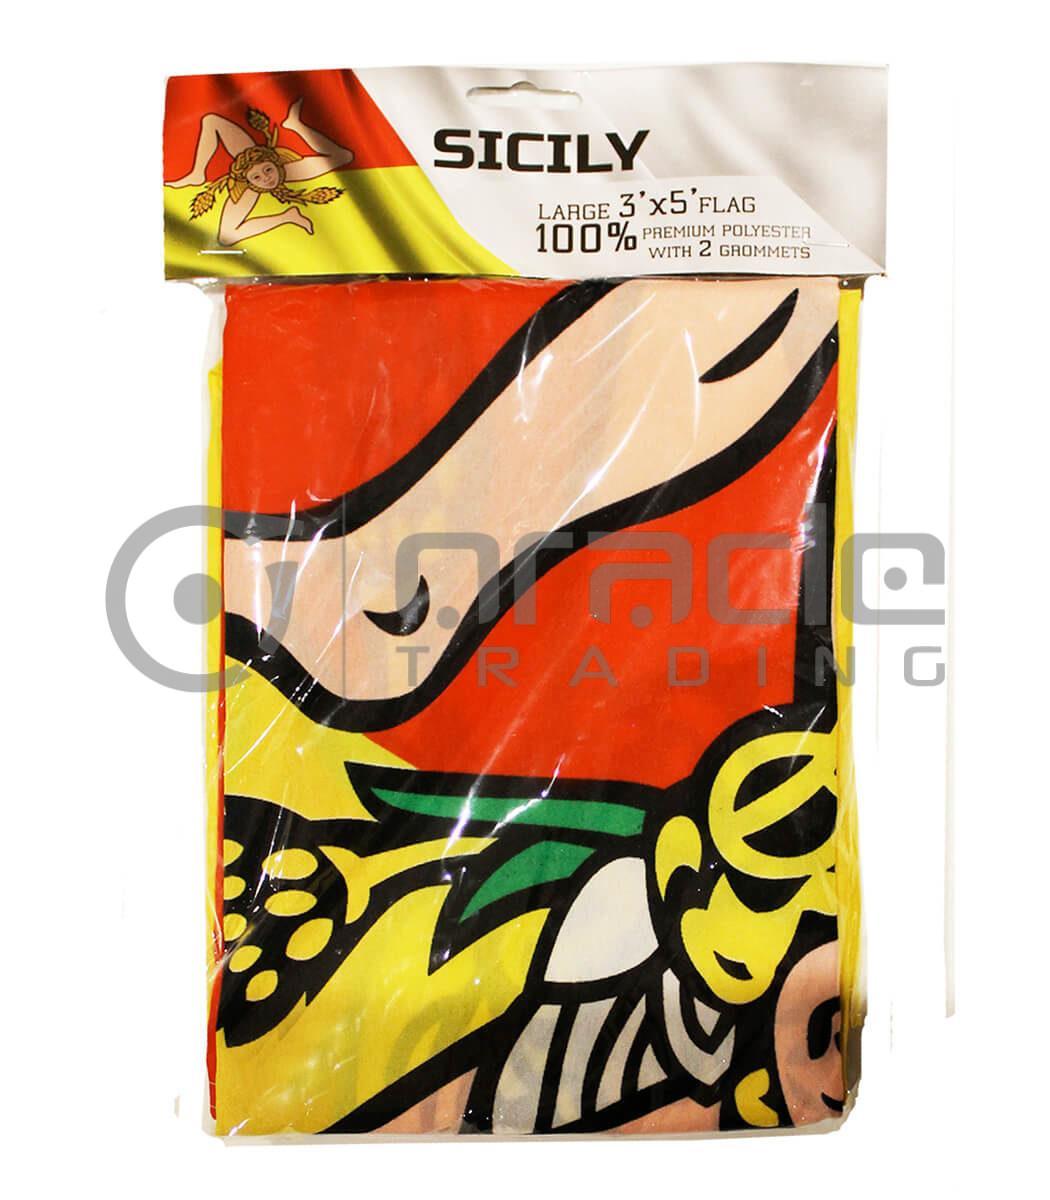 Large 3'x5' Sicily Flag